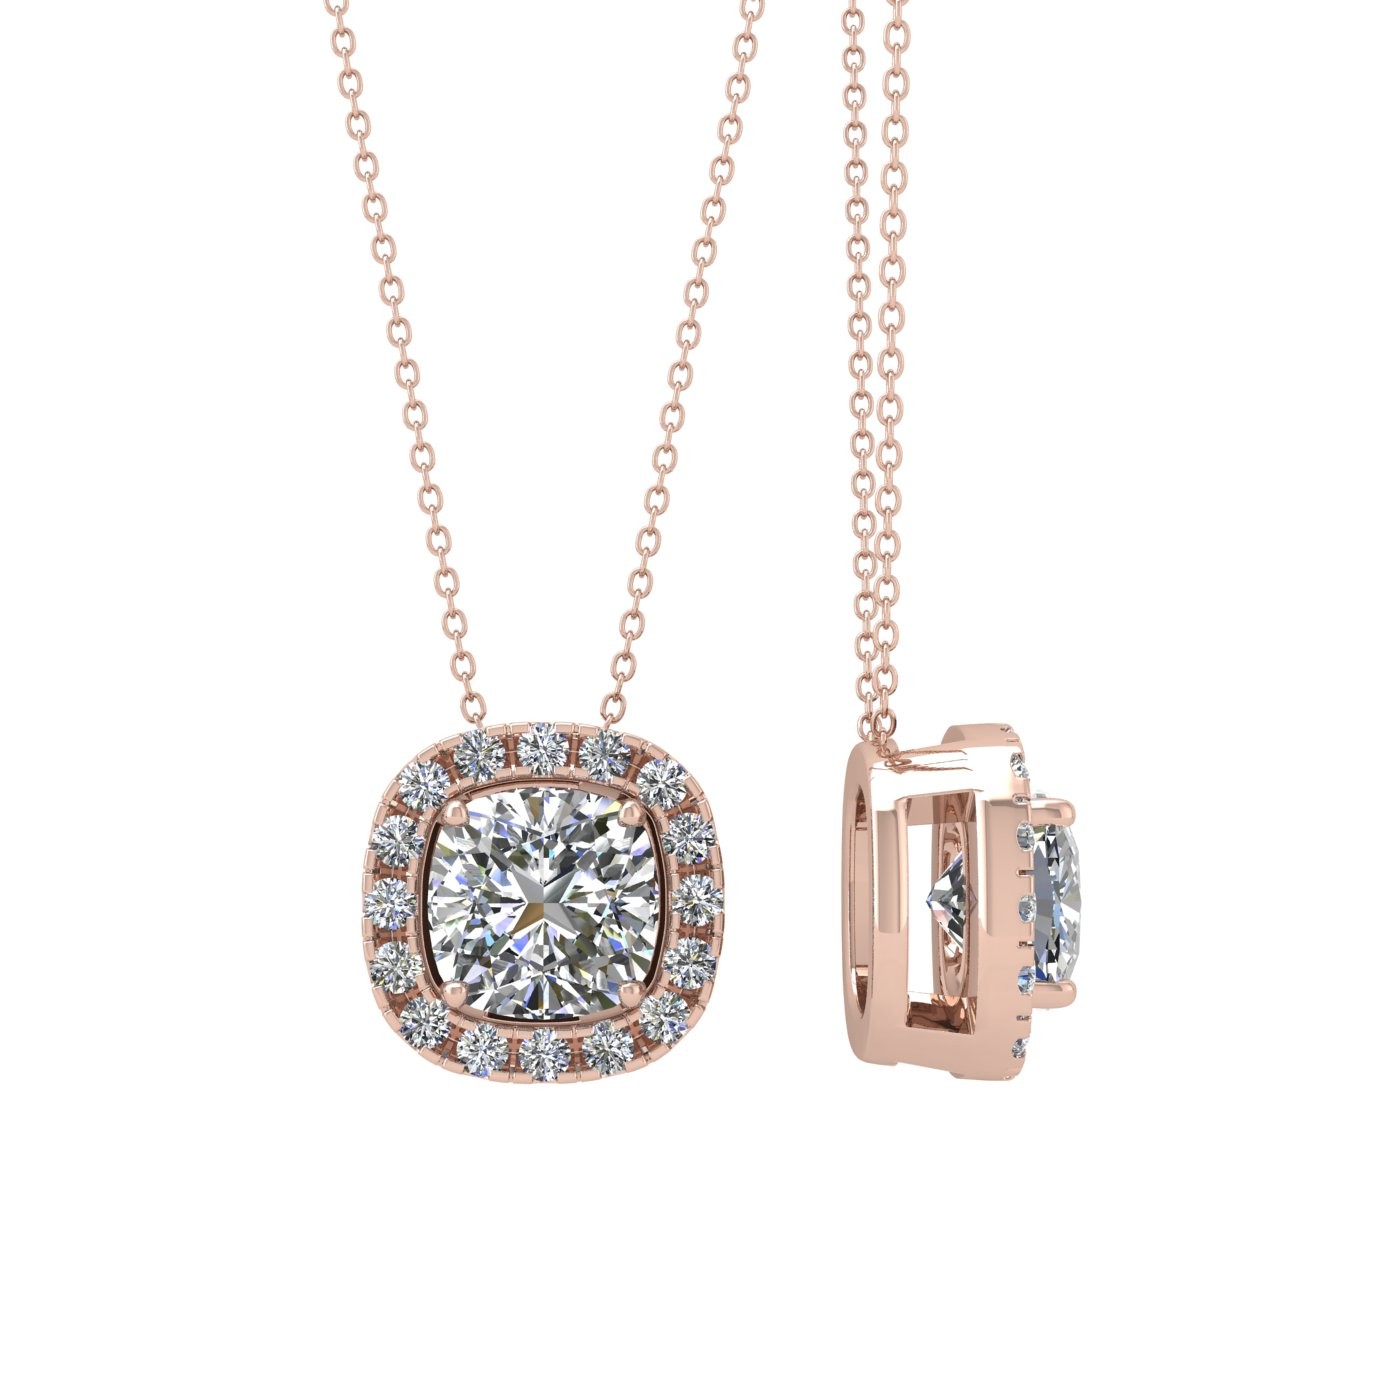 18k rose gold 0,3 ct 4 prongs cushion shape diamond pendant with diamond pavÉ set halo Photos & images